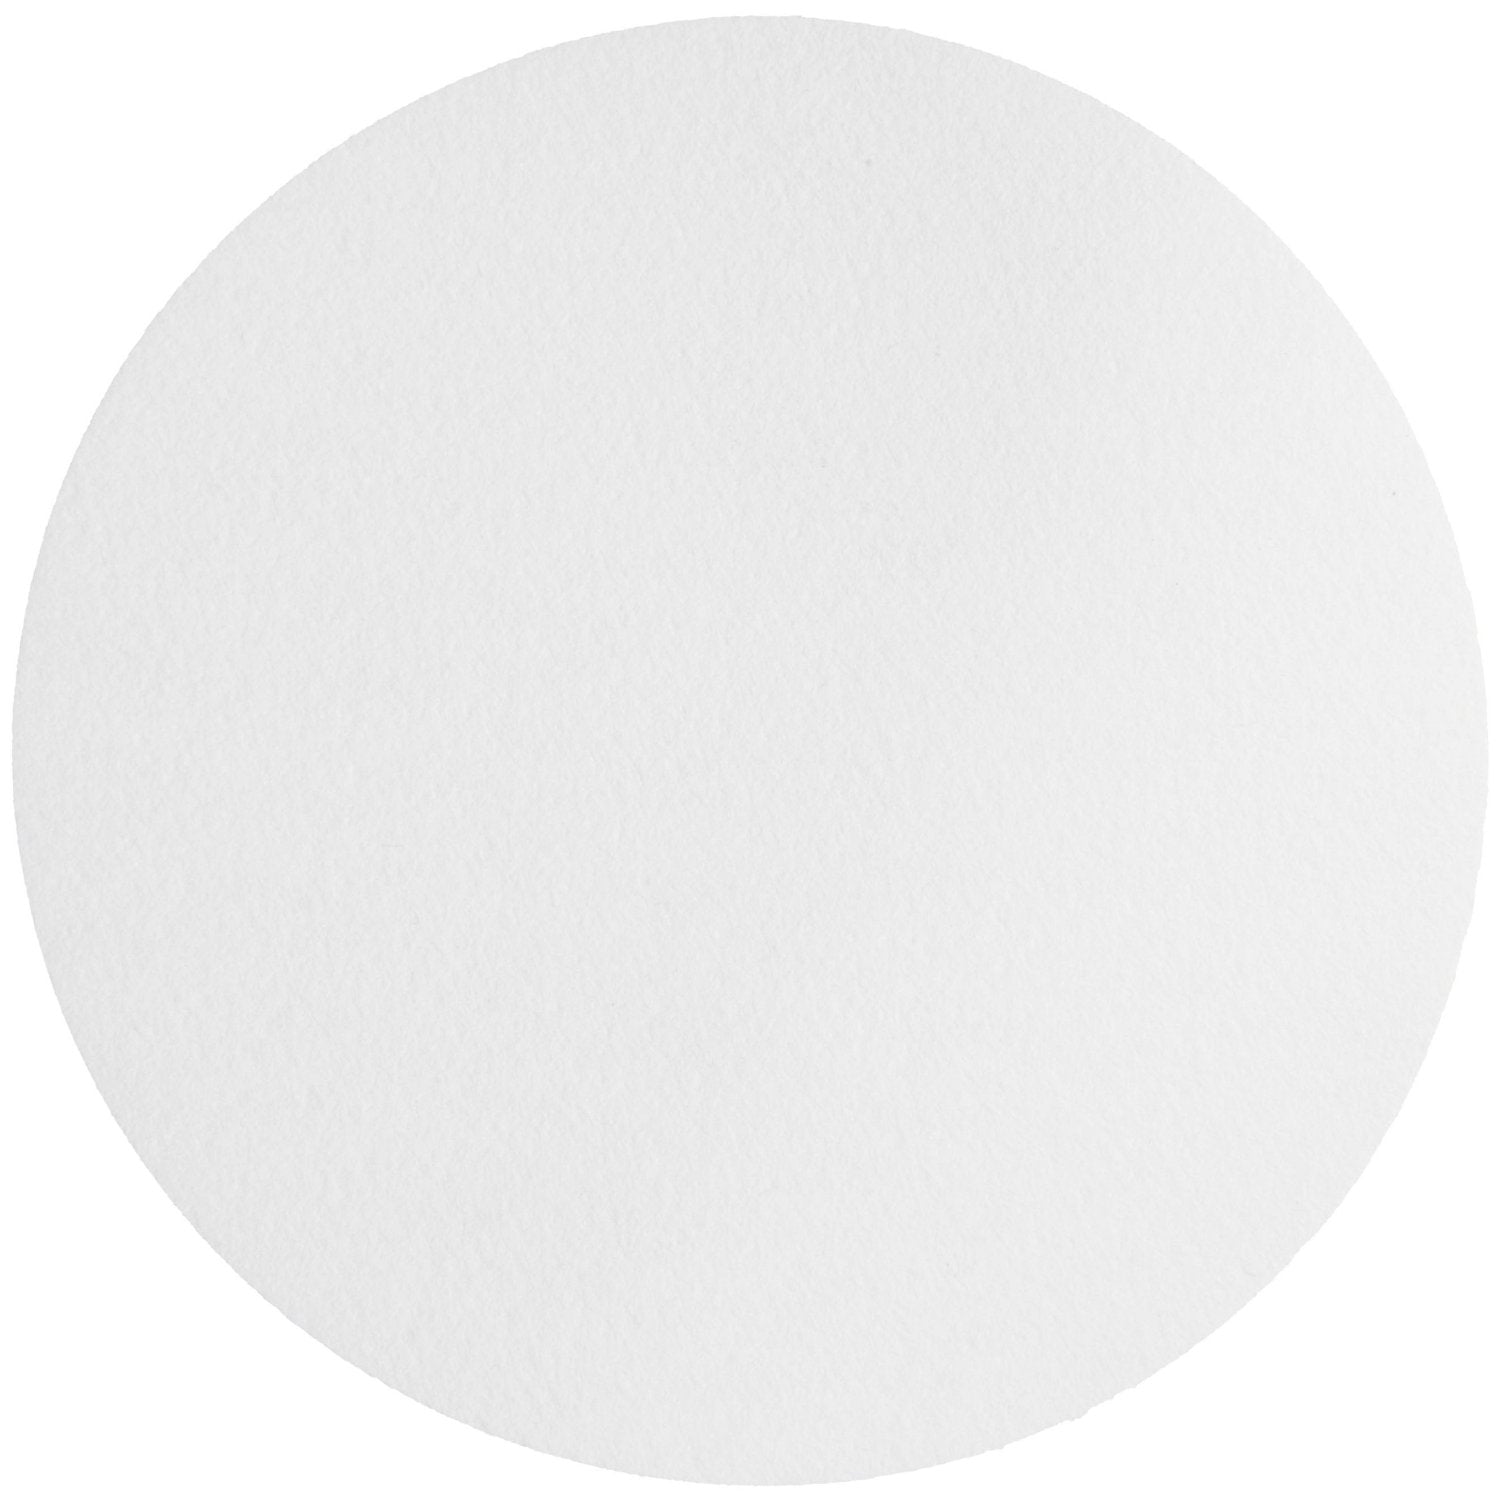 Whatman 7186-004 Cellulose Nitrate, 47mm Dia, 0.65 micrometer Pore Size, Plain White, 100/pk (PN: 7186-004)